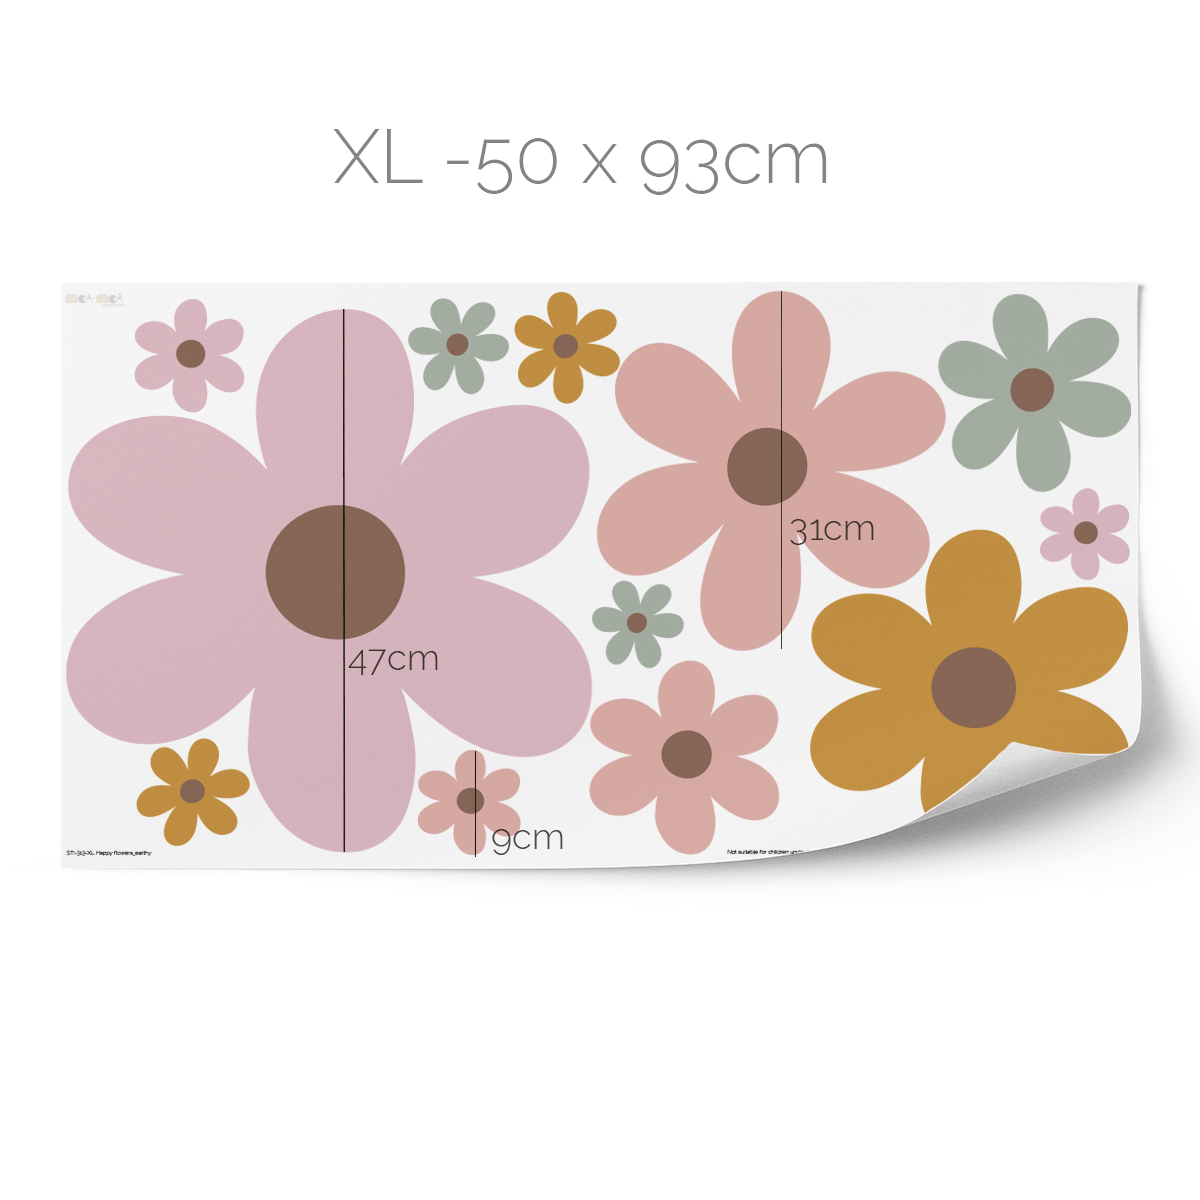 Flower wall stickers - Happy blooms (earthy tones)